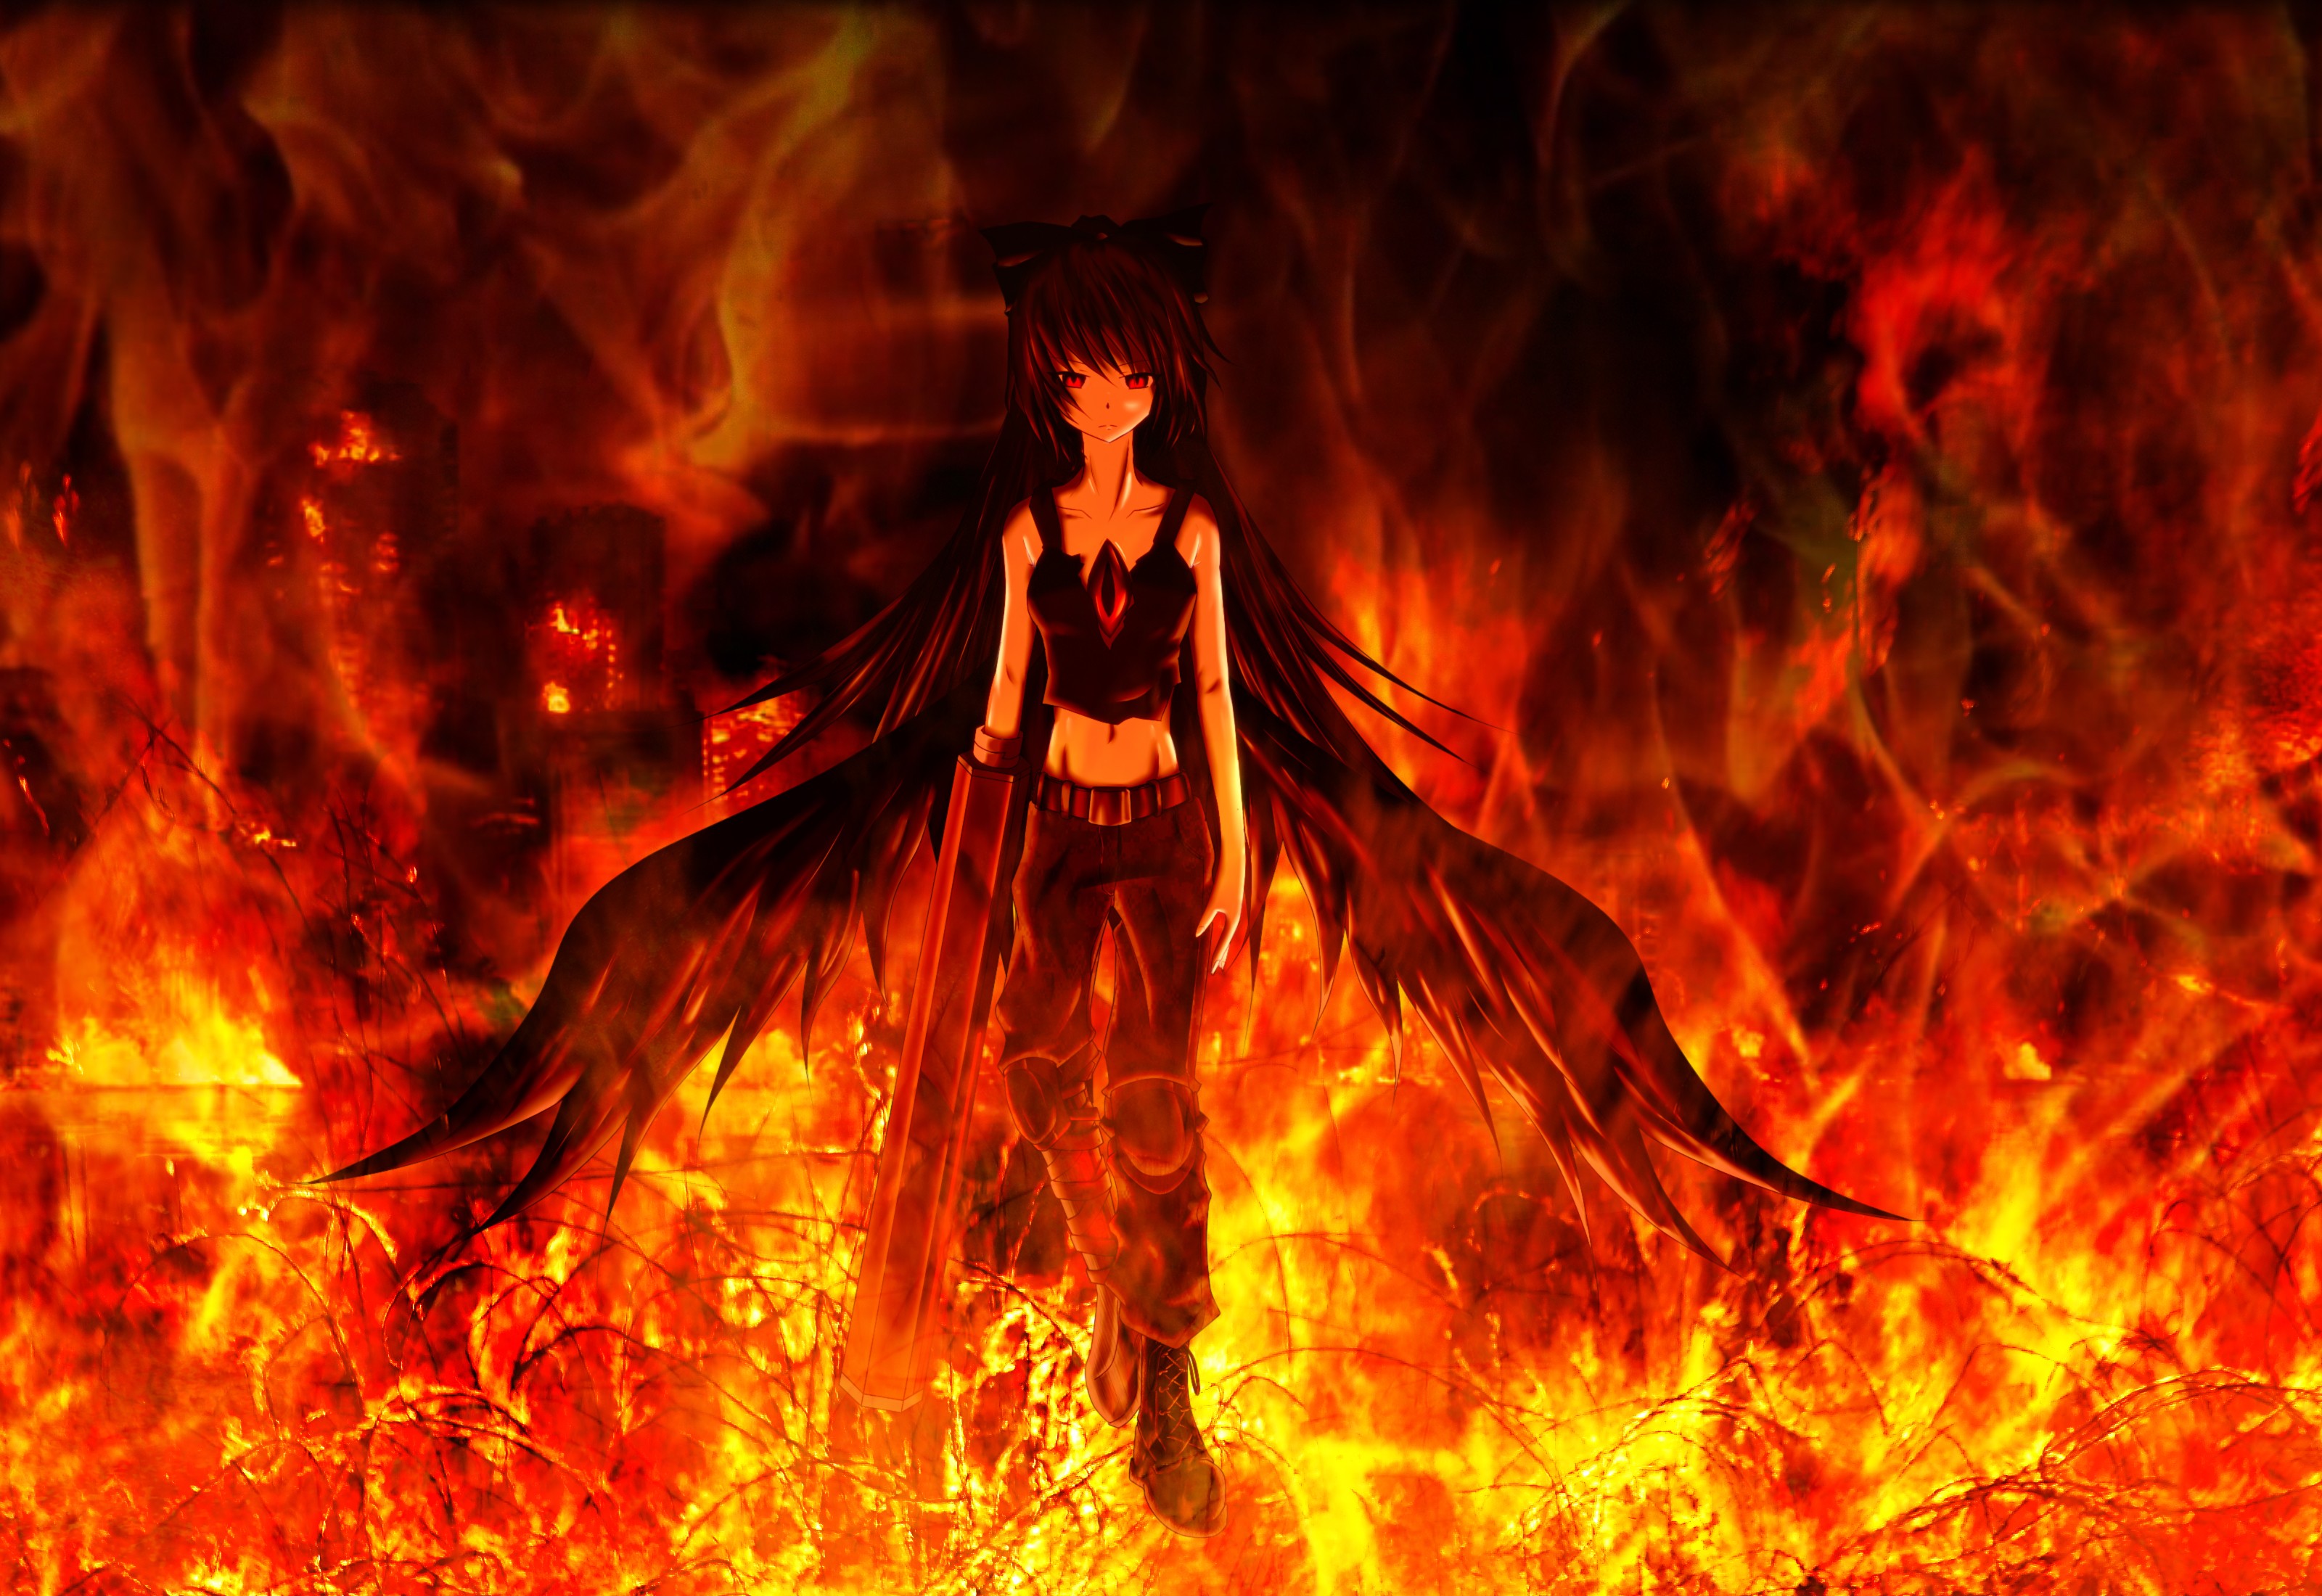 Anime 3200x2200 Touhou Reiuji Utsuho anime girls fire burning anime fantasy art fantasy girl standing women long hair wings belly red eyes